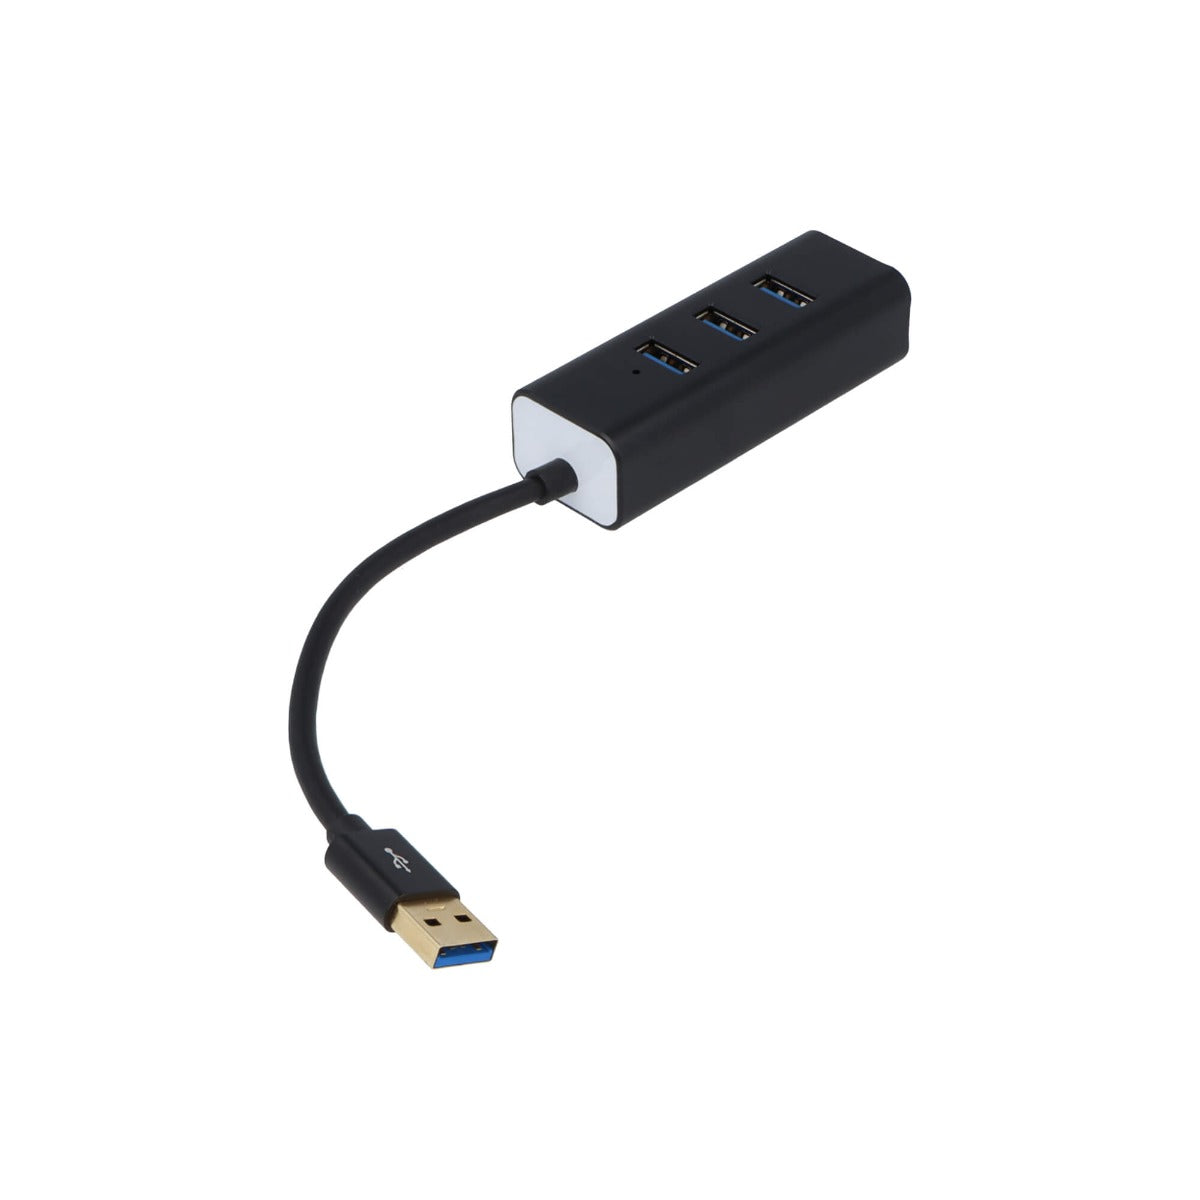 USB 3.0 4 Port Hub –